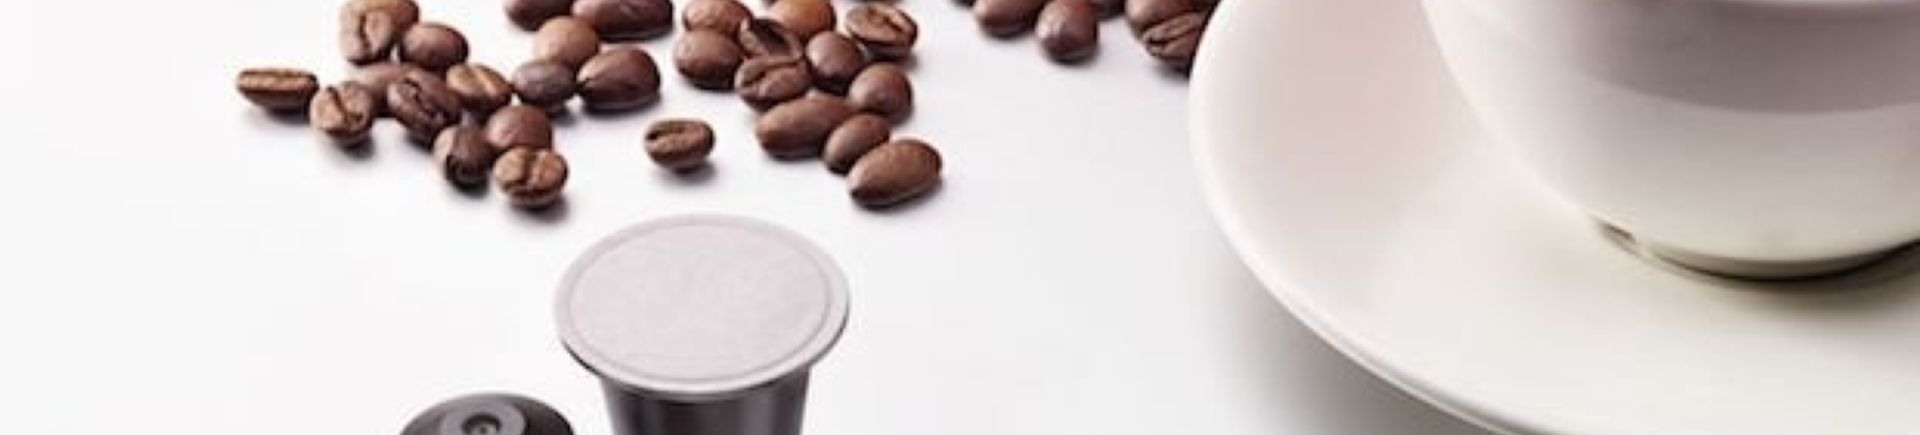 biodegradable coffee capsule